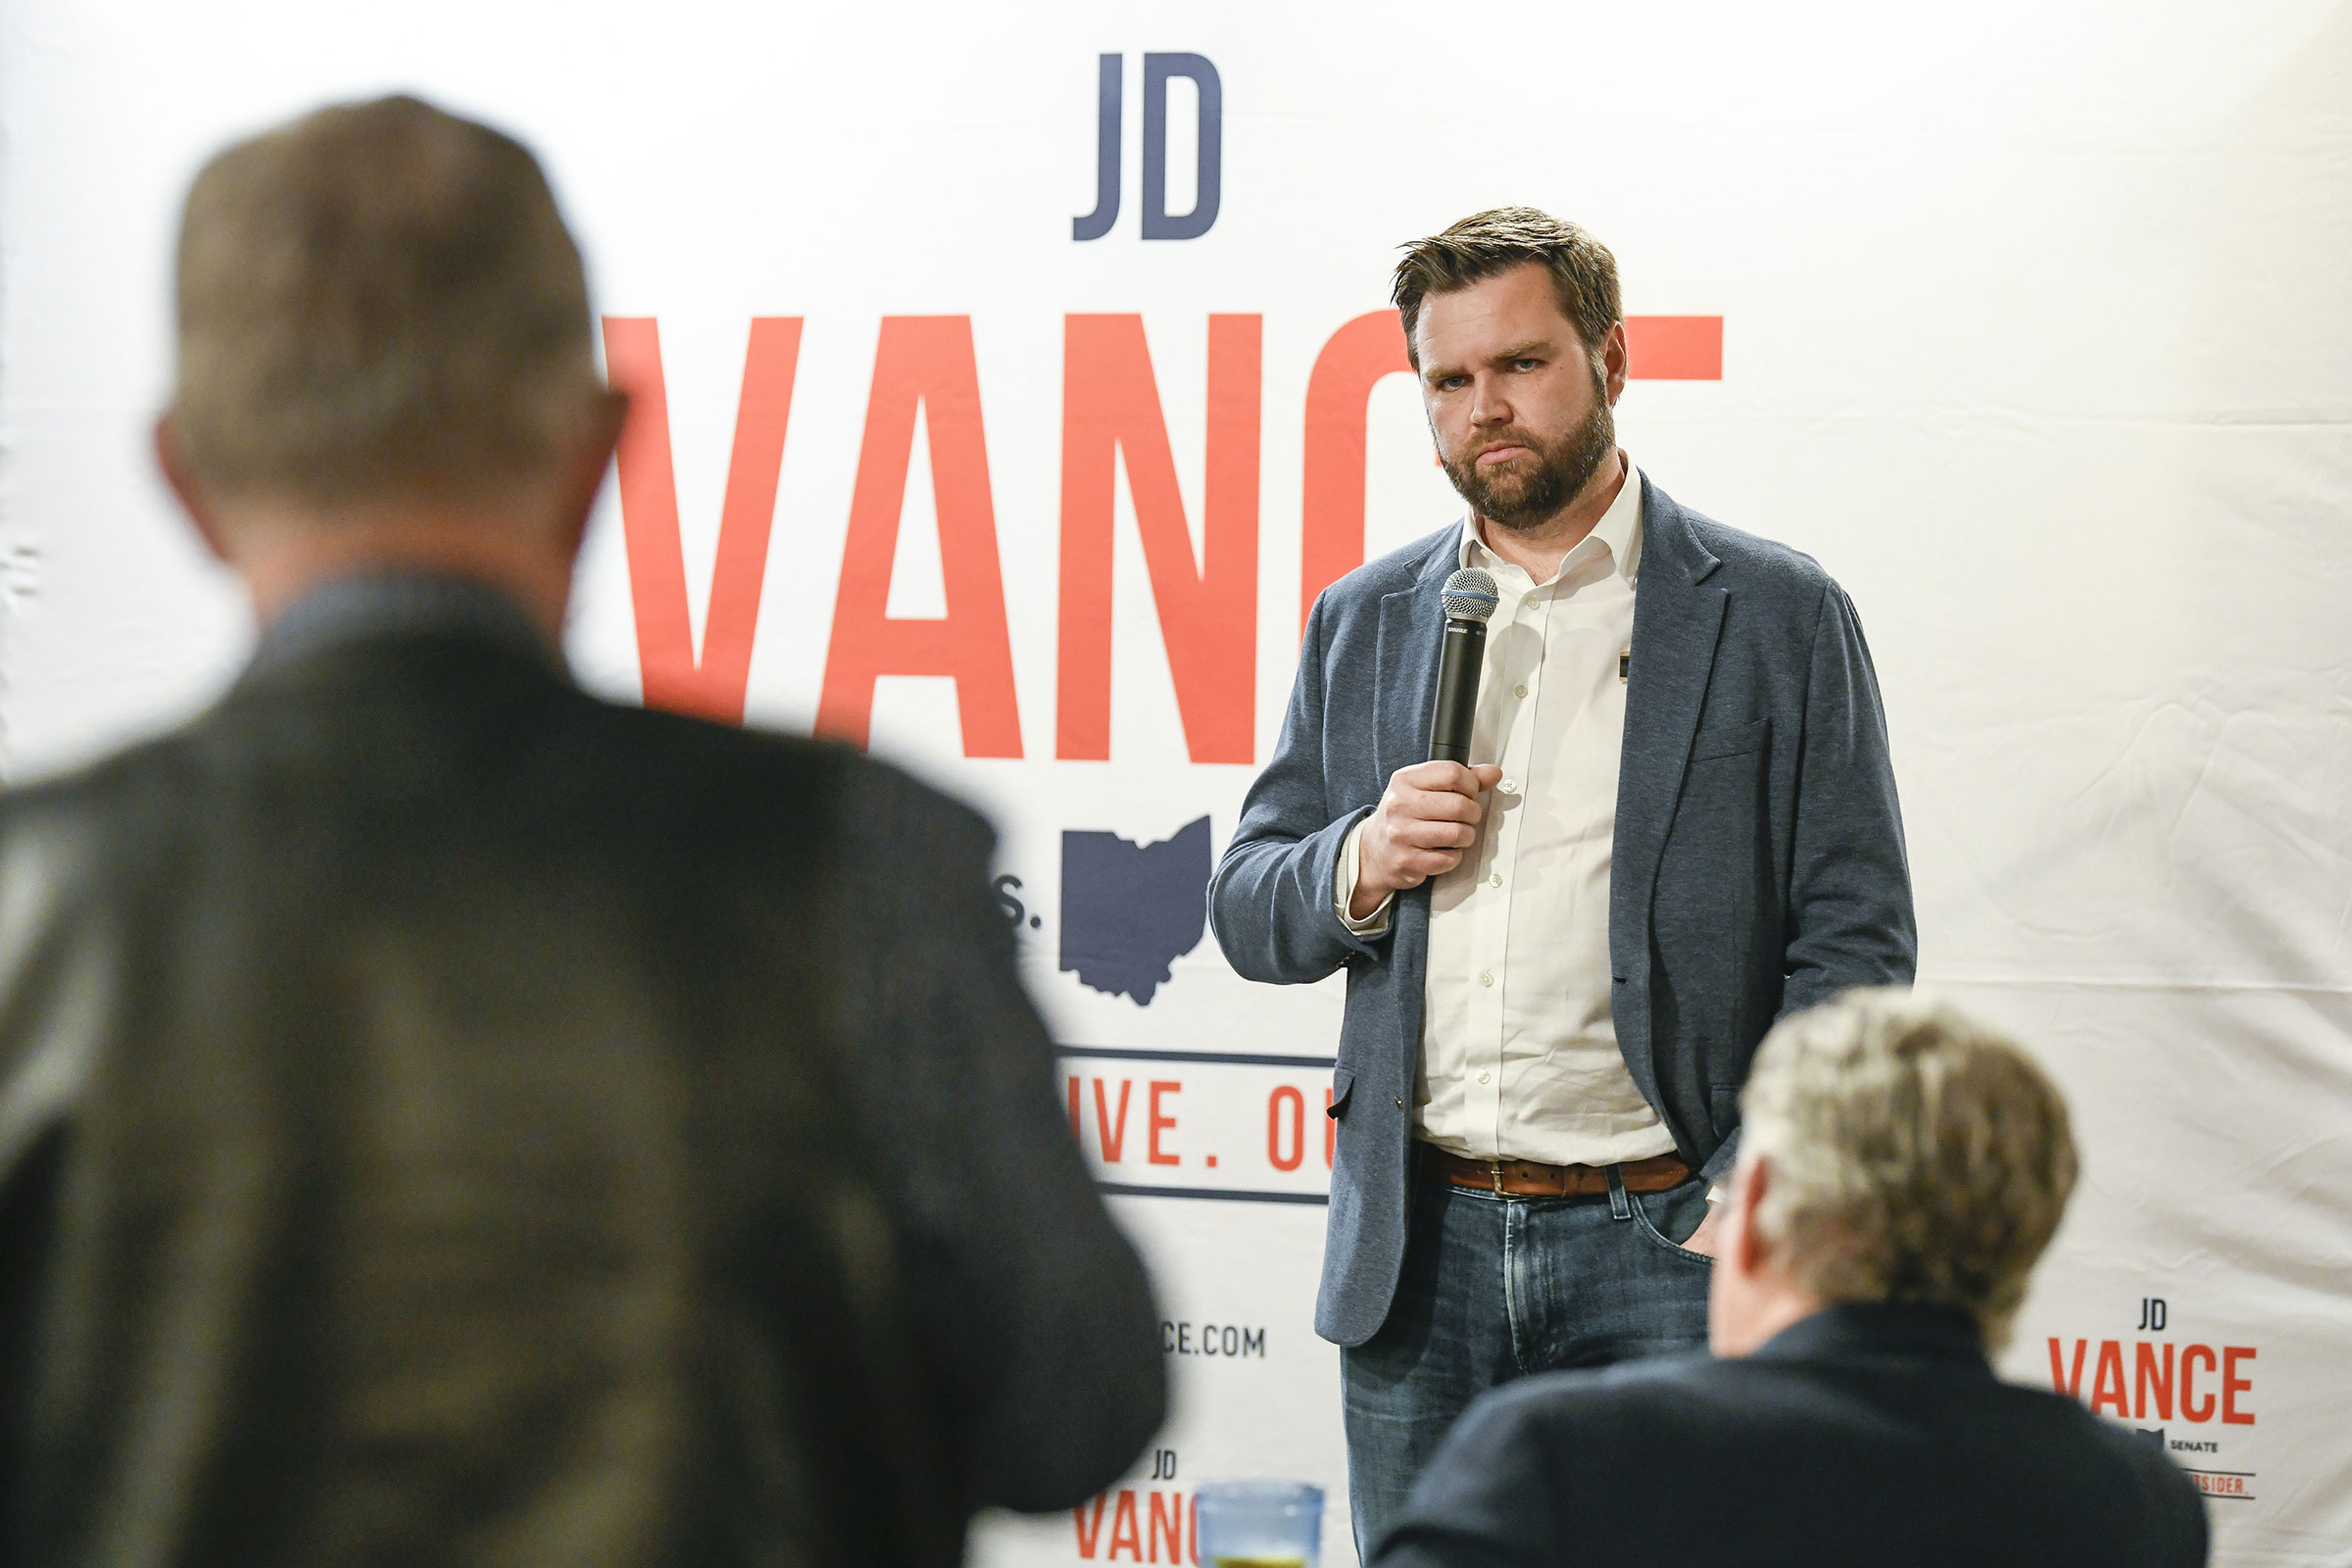 Ohio Republican Senate Candidate JD Vance Holds Campaign Event